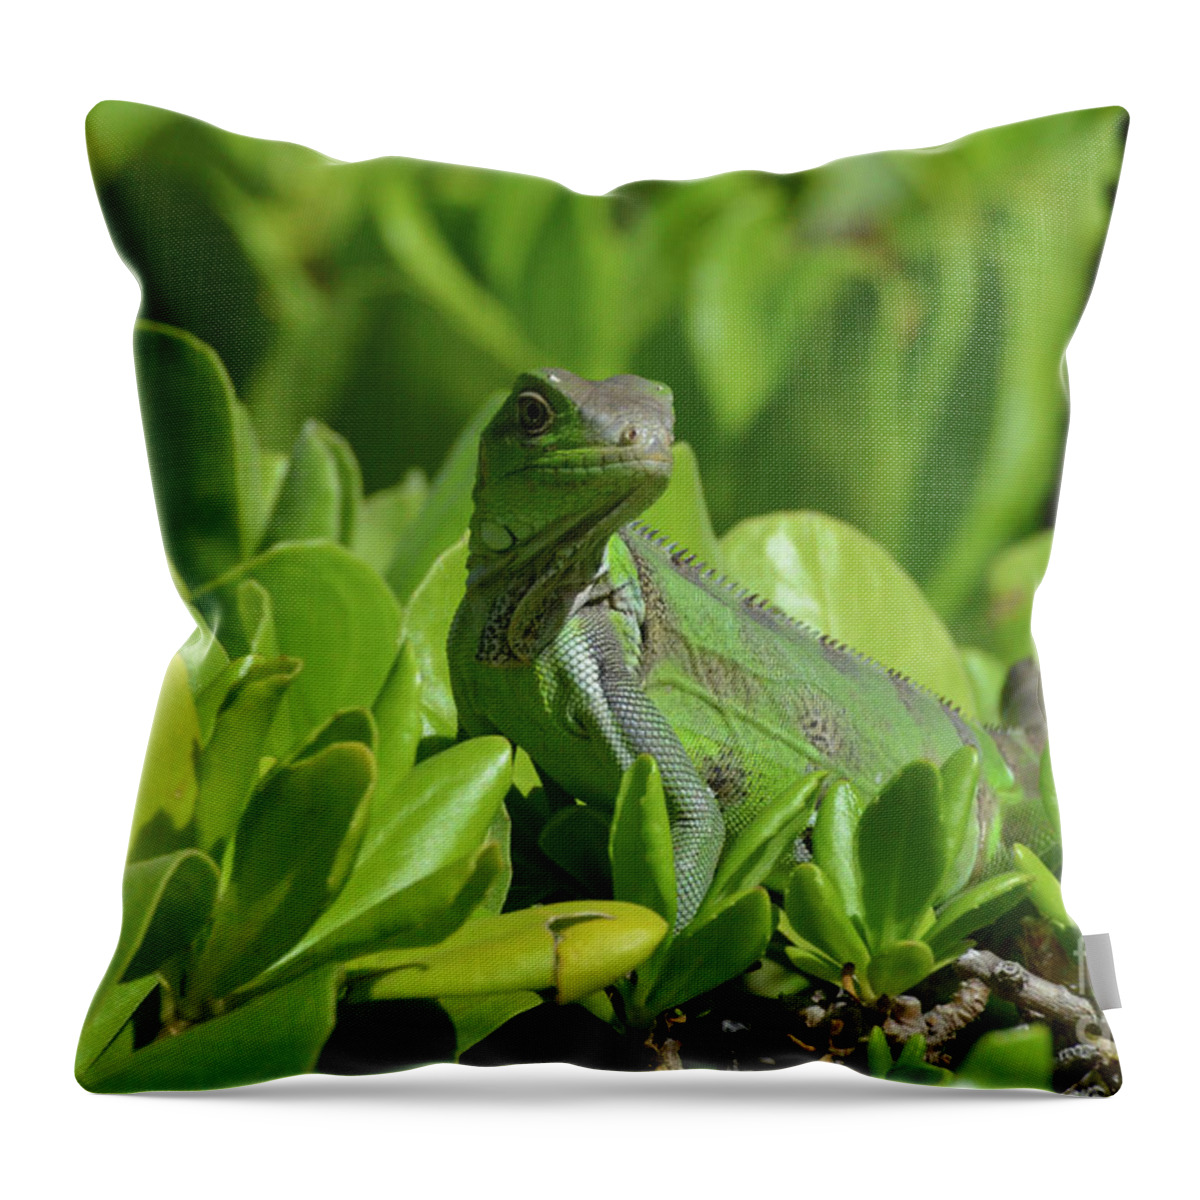 Iguana Throw Pillow featuring the photograph American Iguana Creeping through a Bush by DejaVu Designs